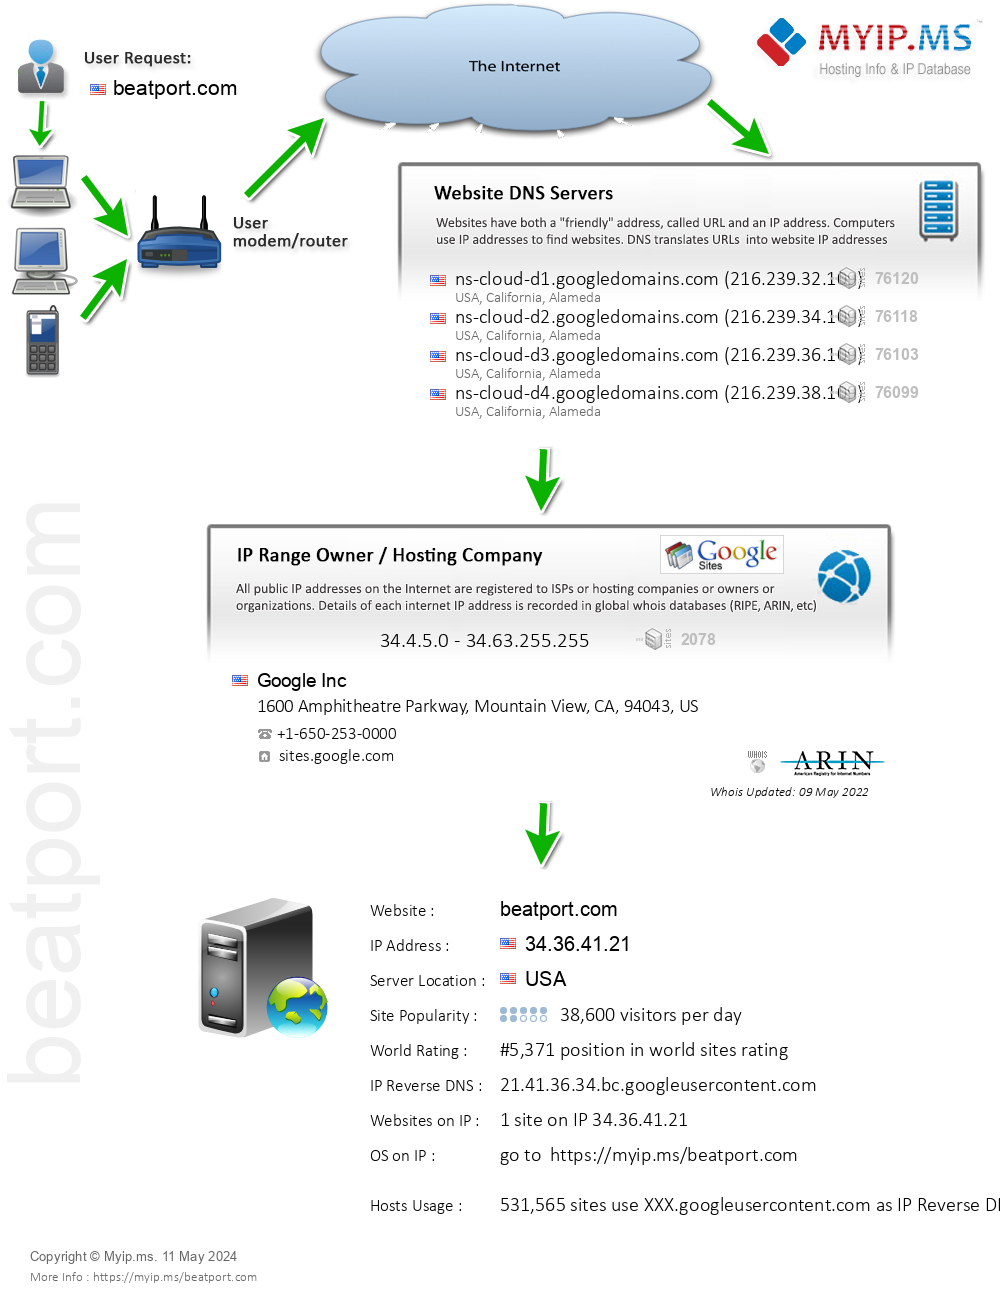 Beatport.com - Website Hosting Visual IP Diagram